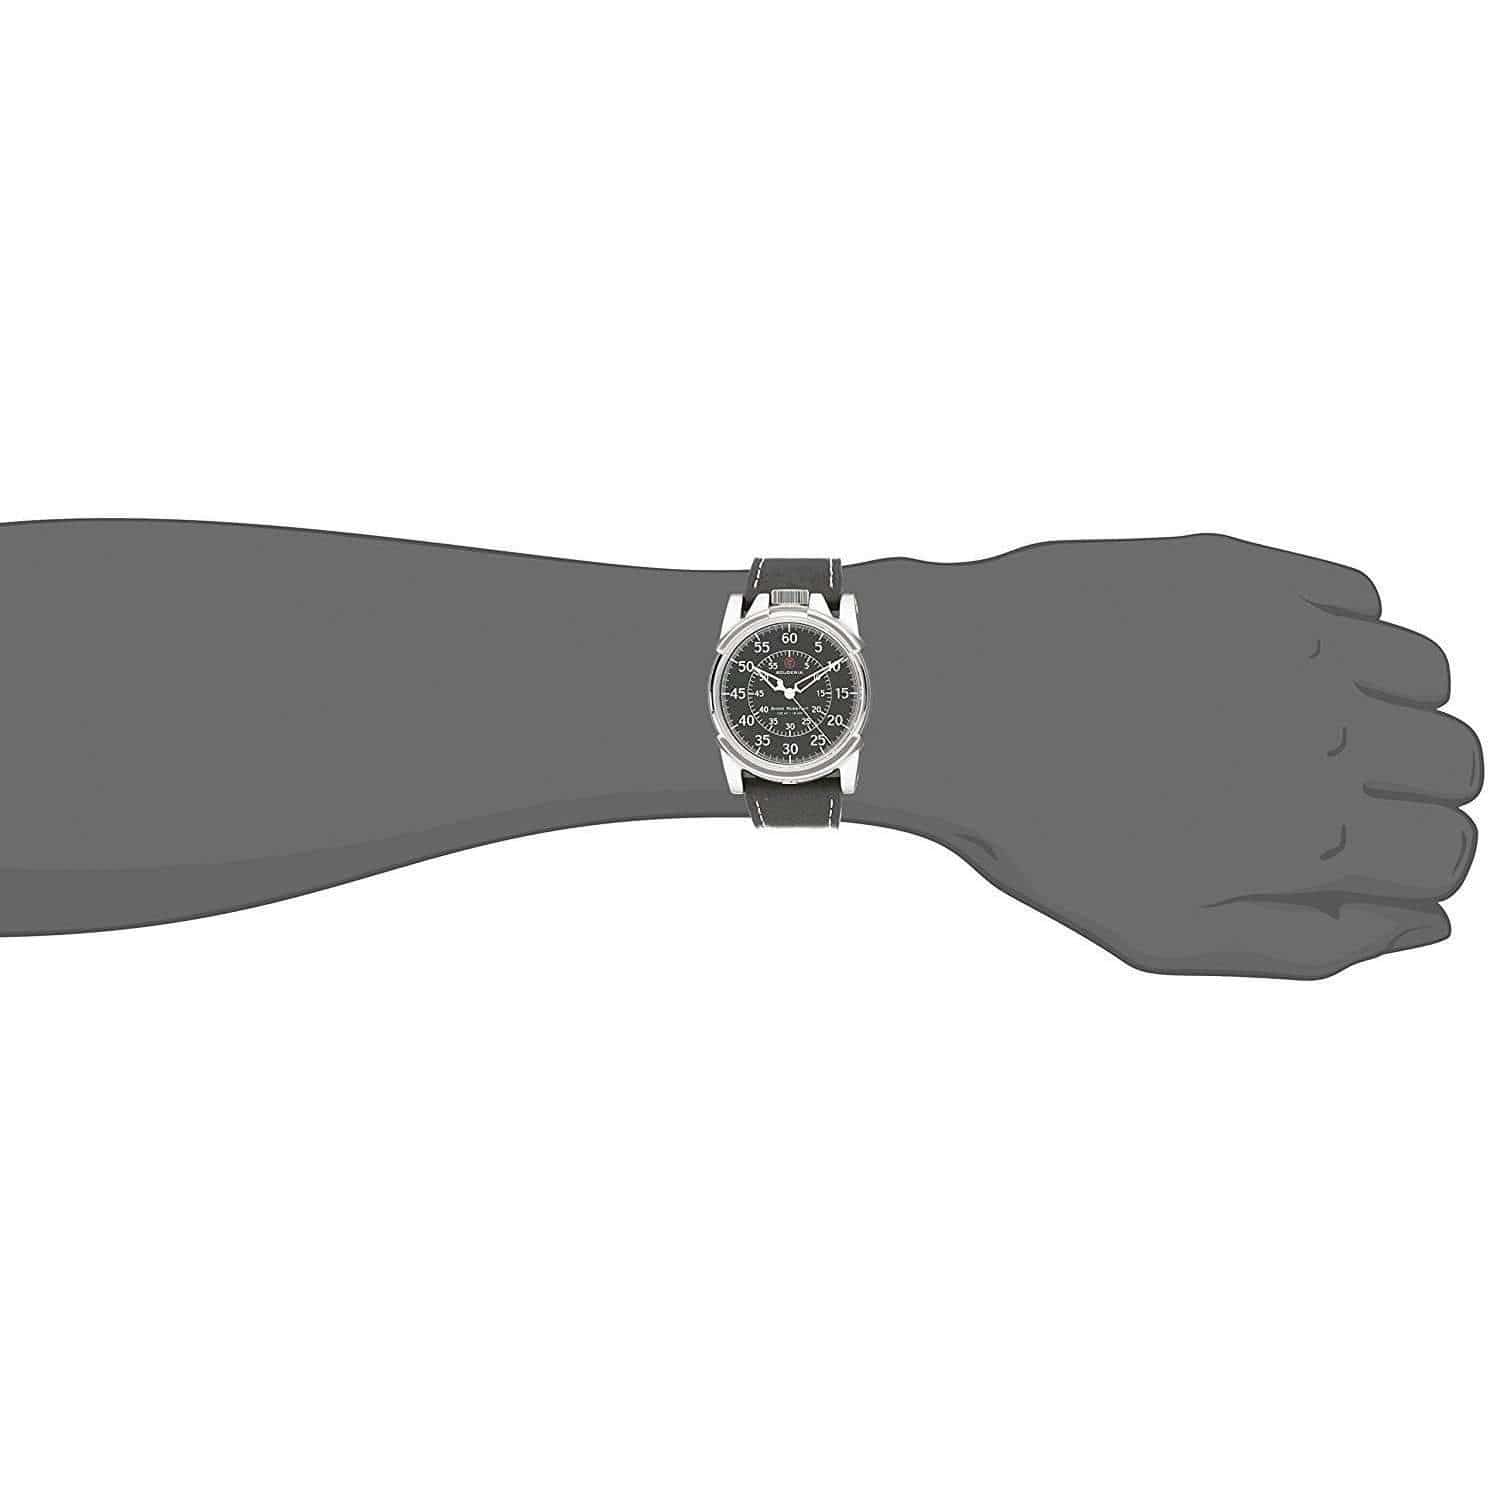 ROOK JAPAN:CT Scuderia Men's CS10208 Analog Display Swiss Quartz Black Watch,Fashion Watch,CT Scuderia